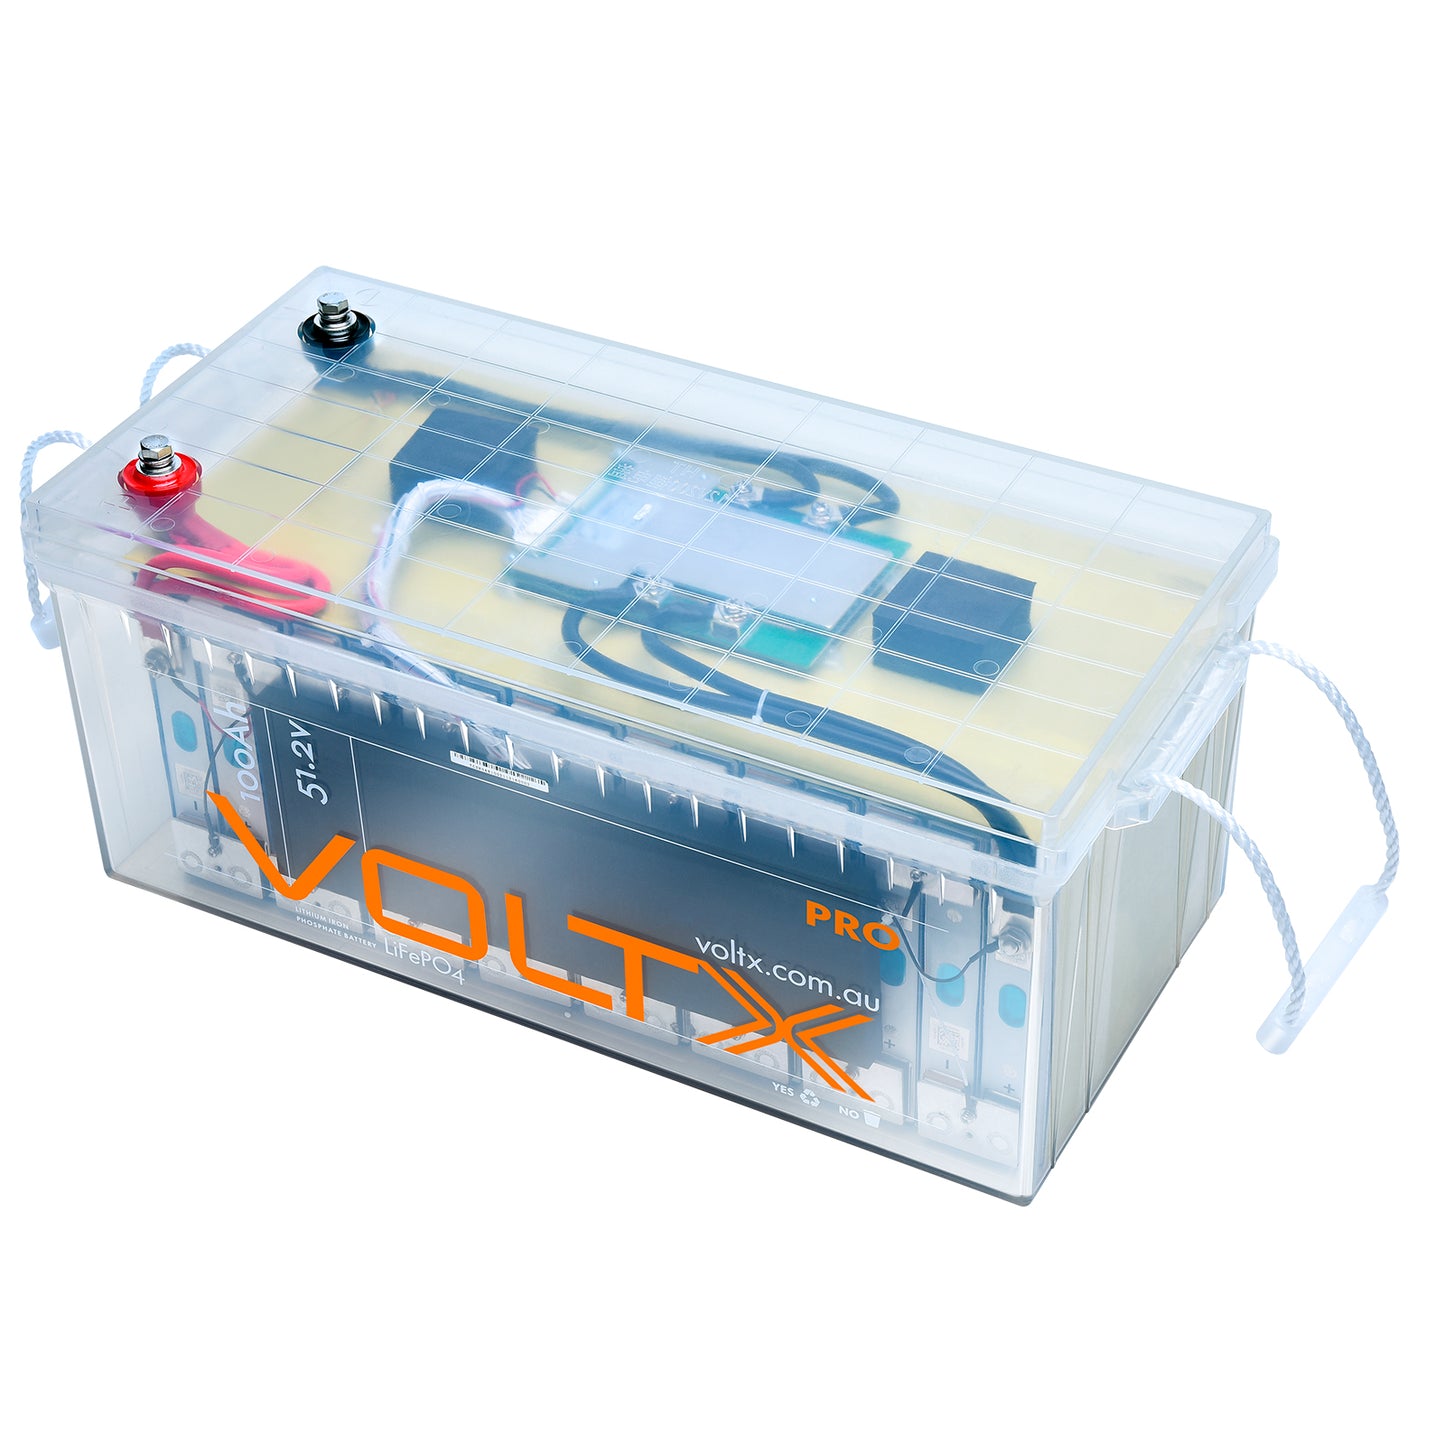 VoltX 48V 100Ah Lithium Battery LiFePO4 Premium PLUS Built-in BMS & Power Voltage Display